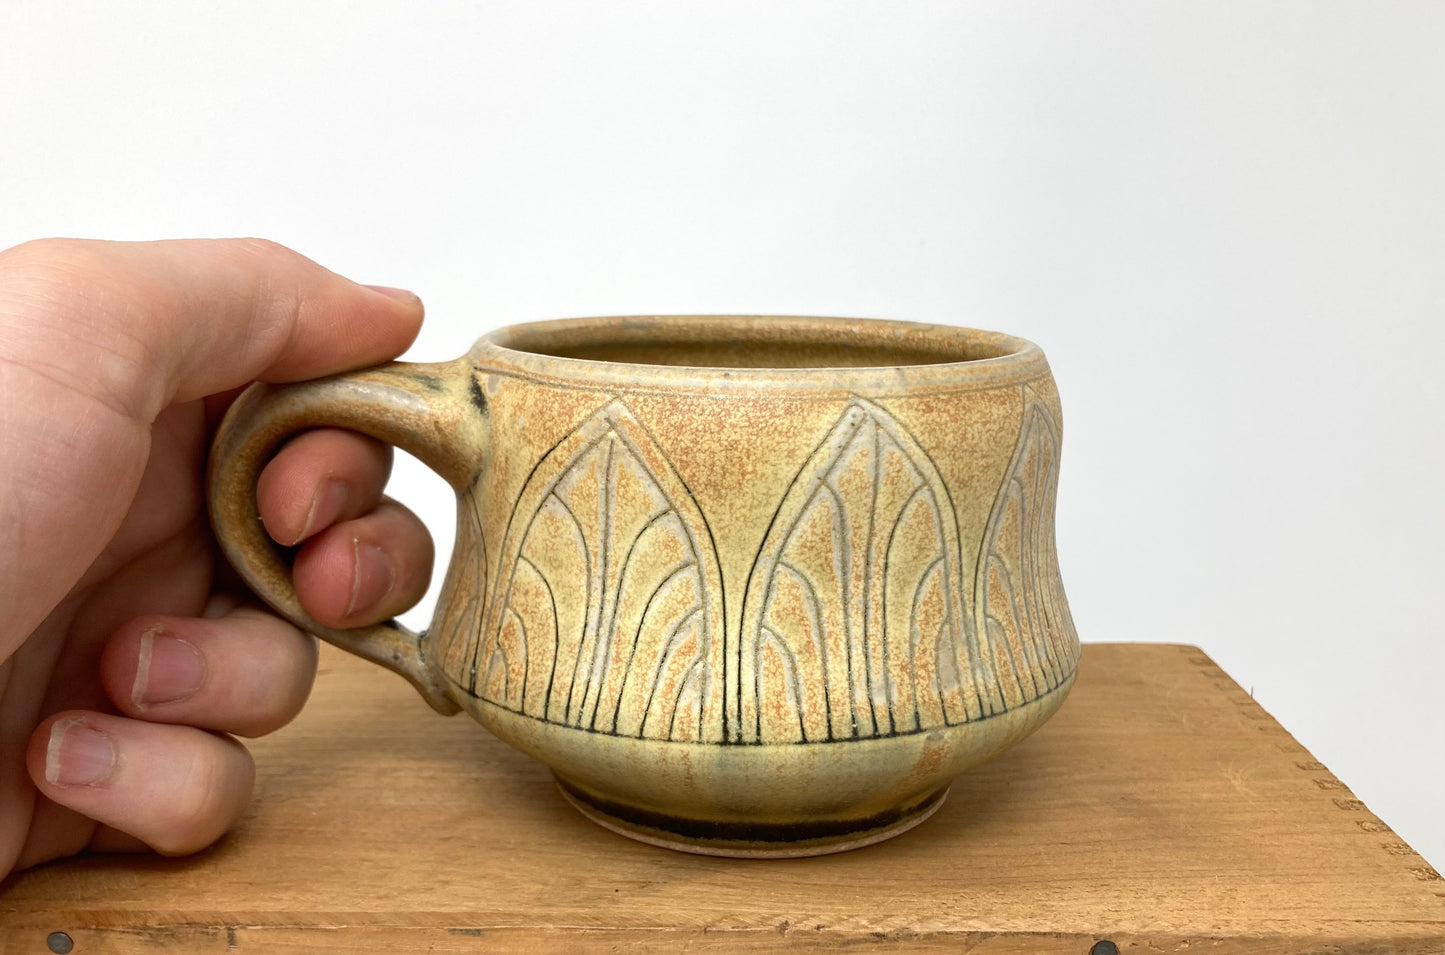 Art Deco Arches Mug #1 in Goldenrod